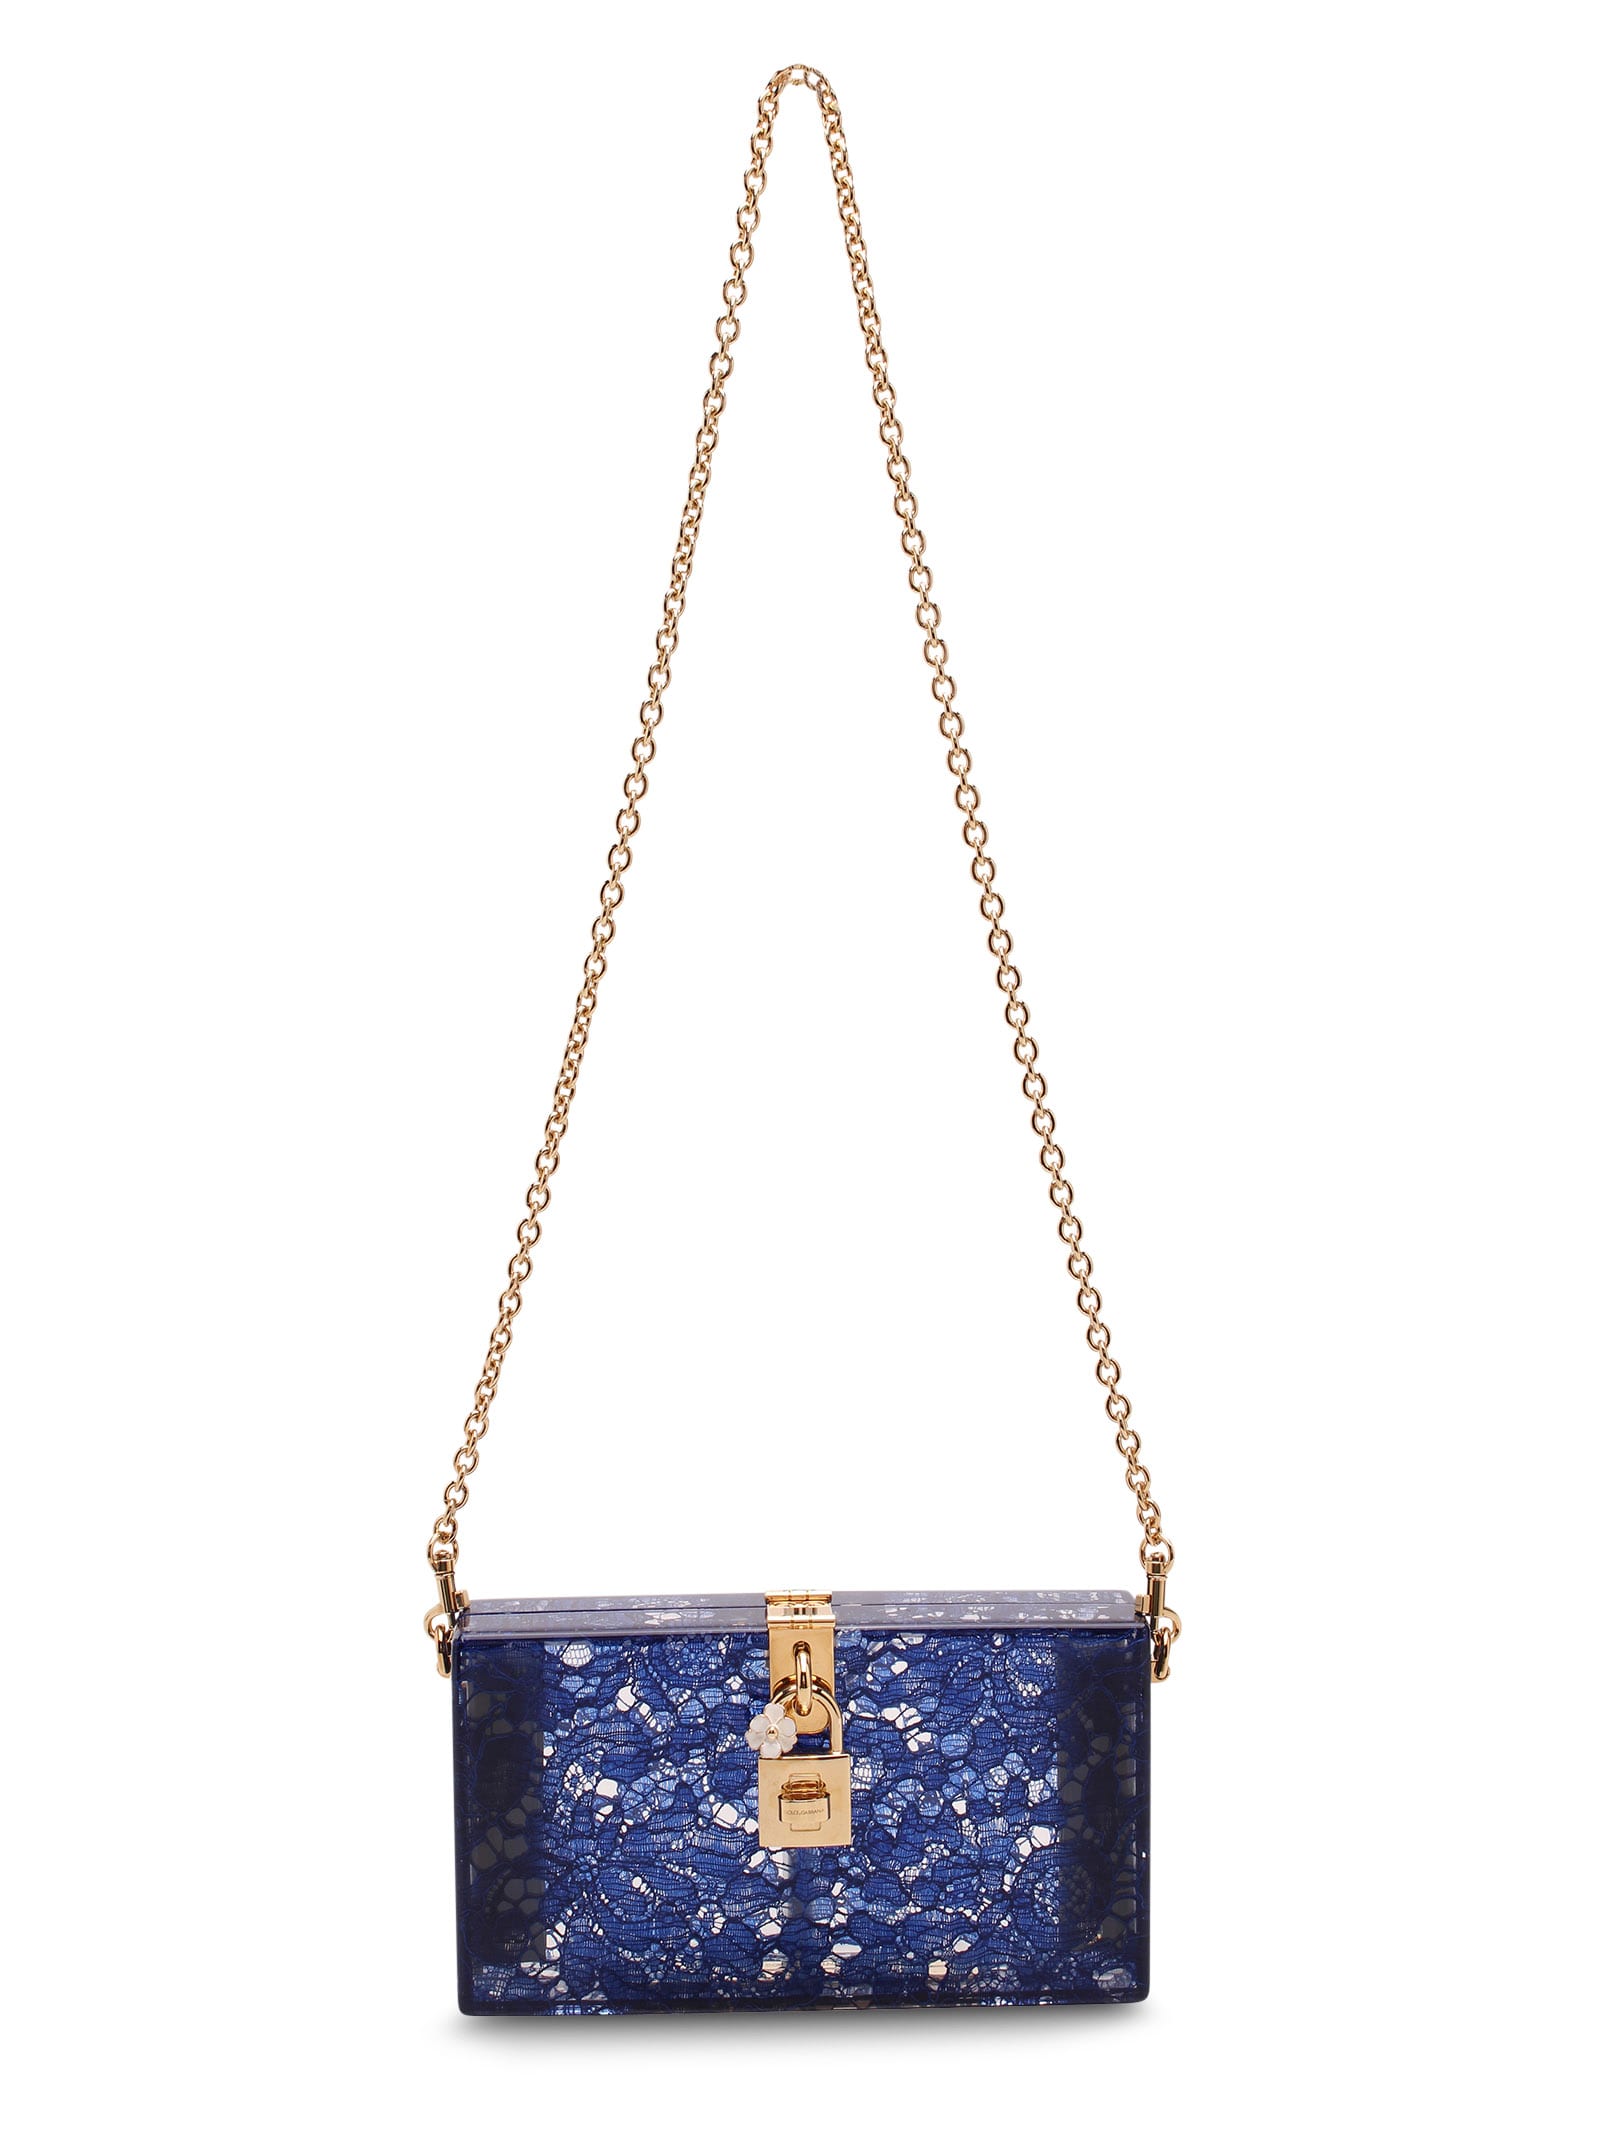 Dolce & Gabbana Lace Clutch Bag